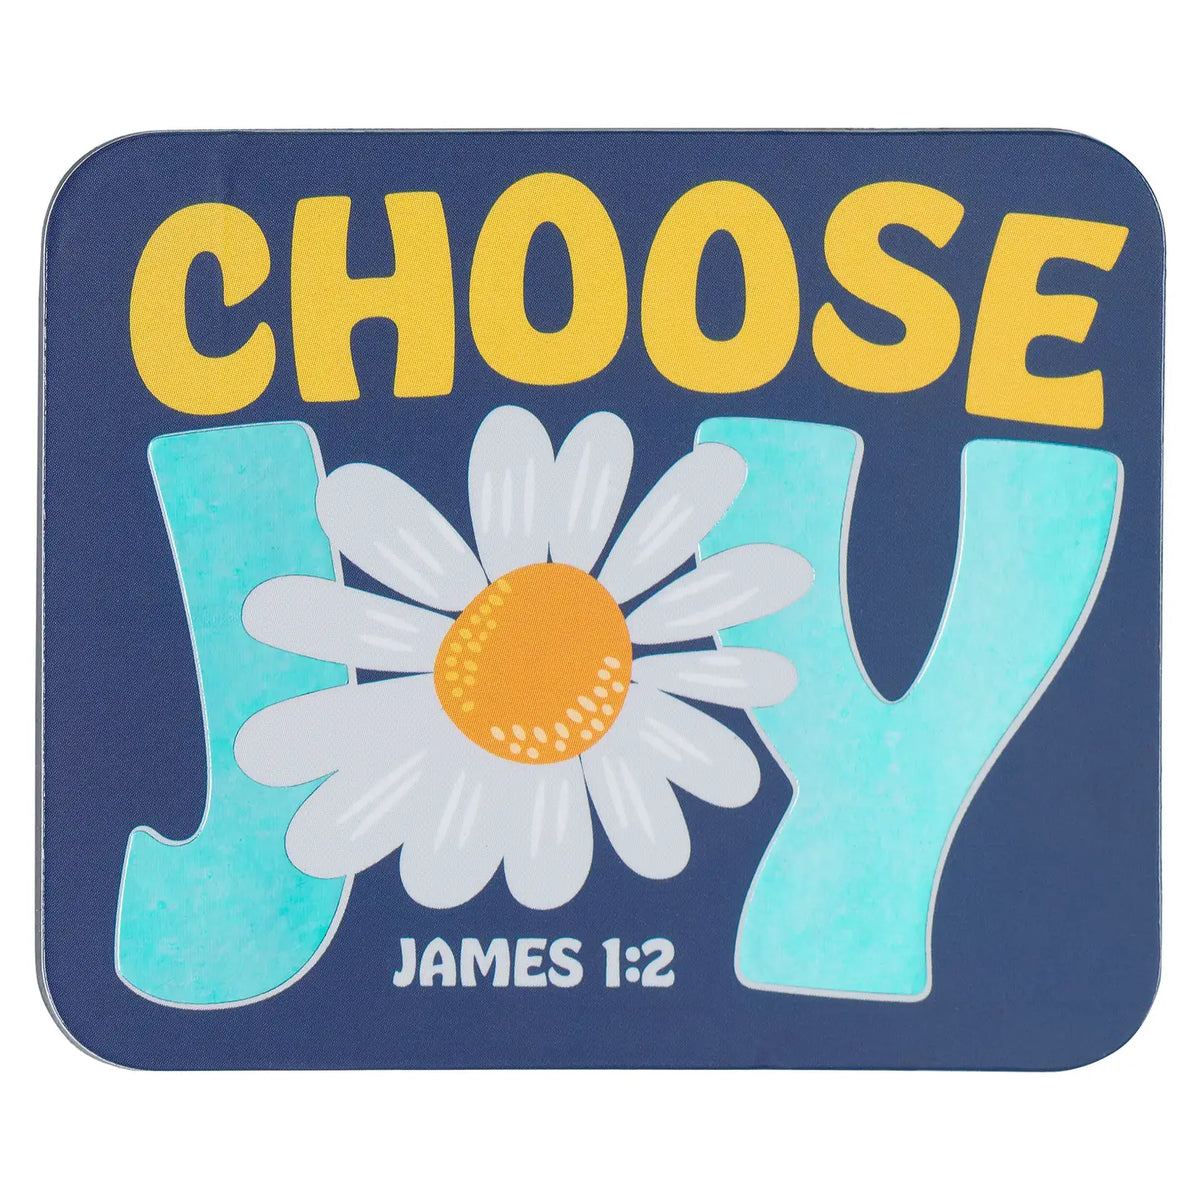 Magnet Daisy Choose Joy James 1:2